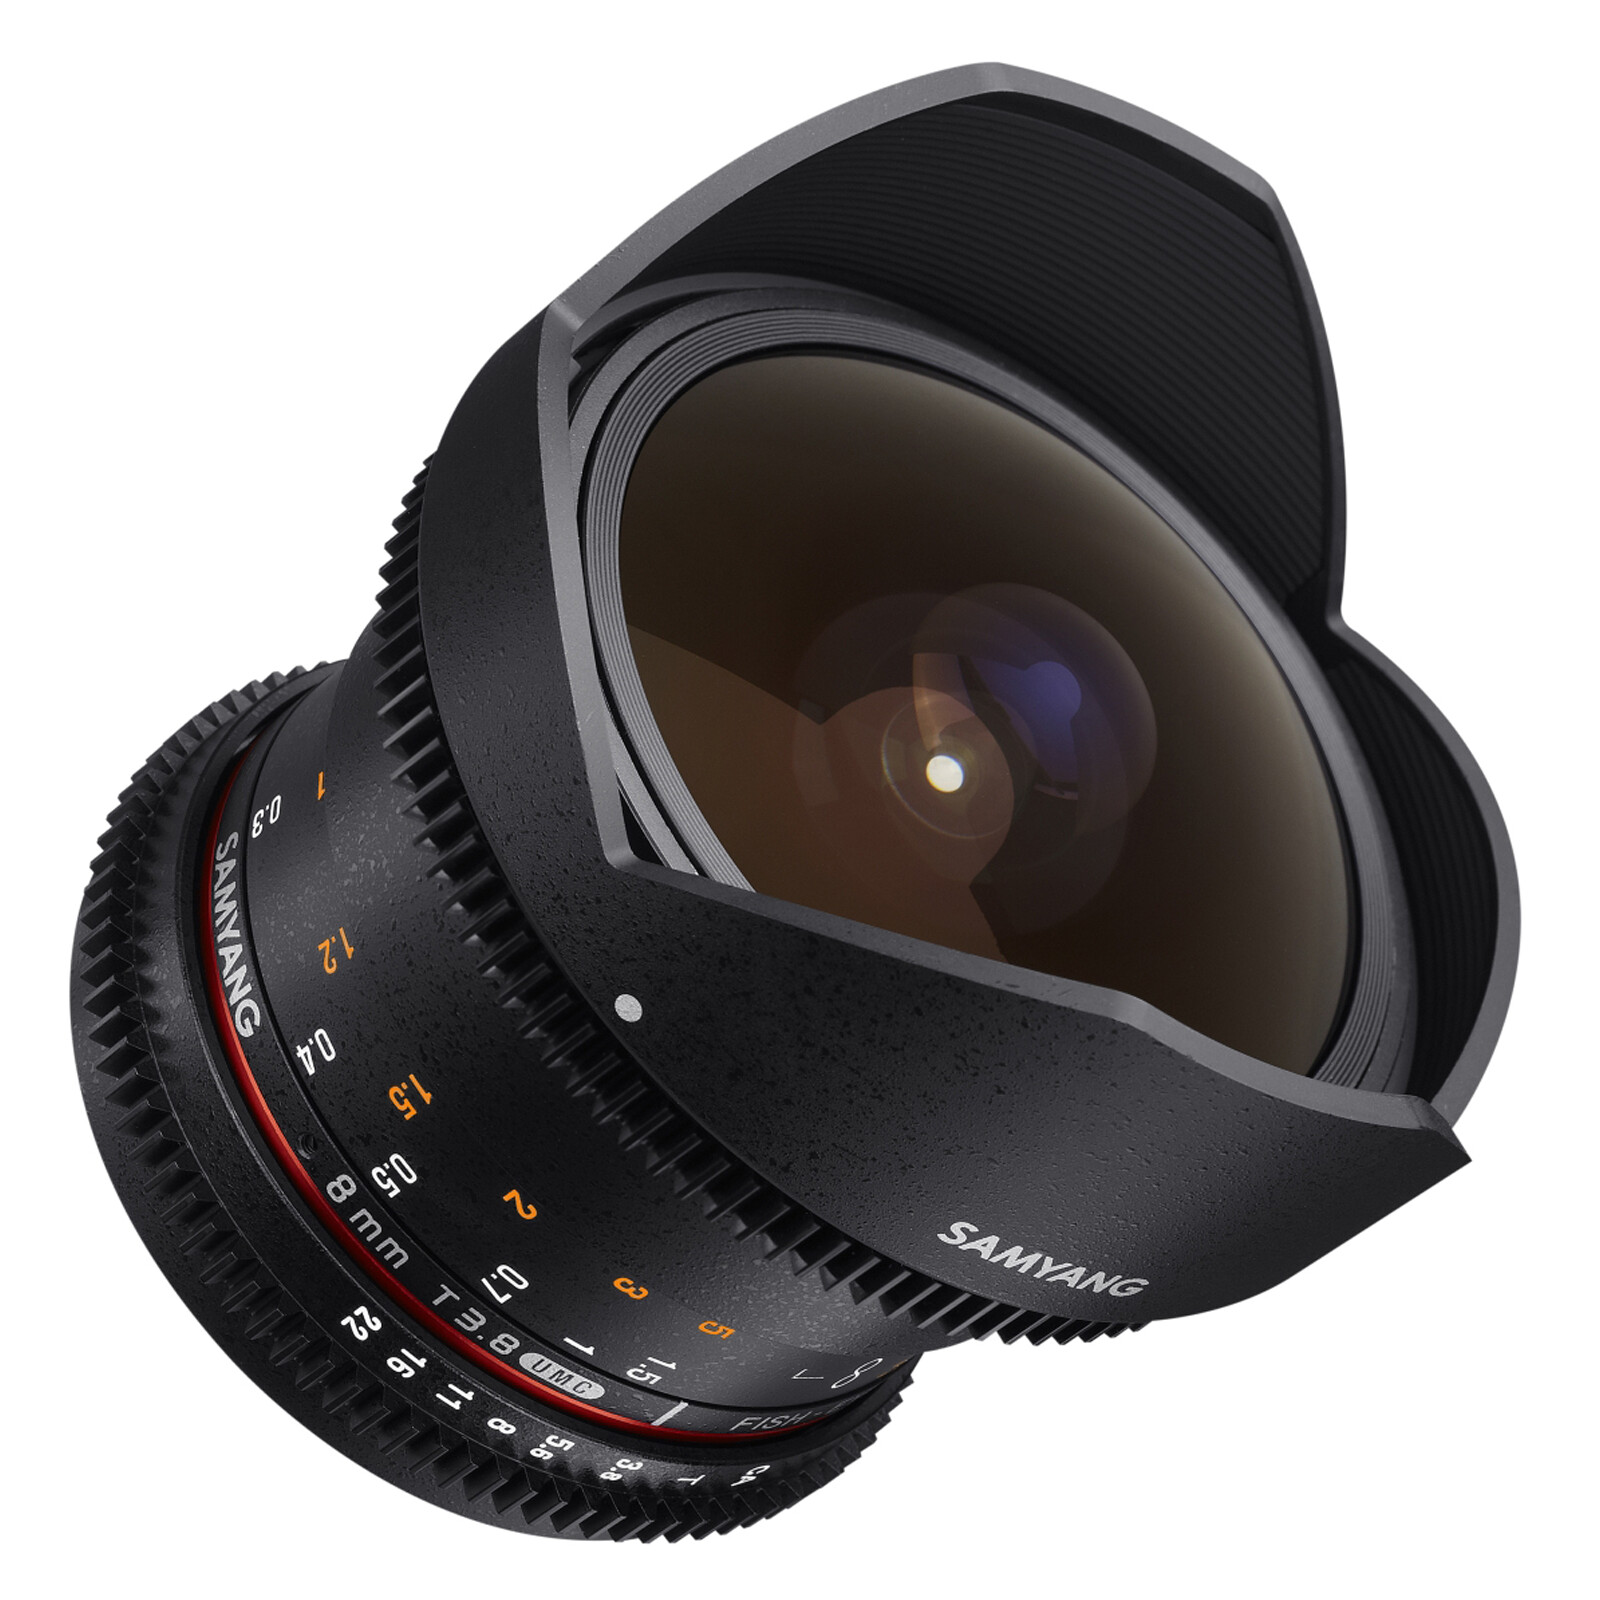 Samyang MF 8/3,8 Fisheye II Video DSLR Canon EF